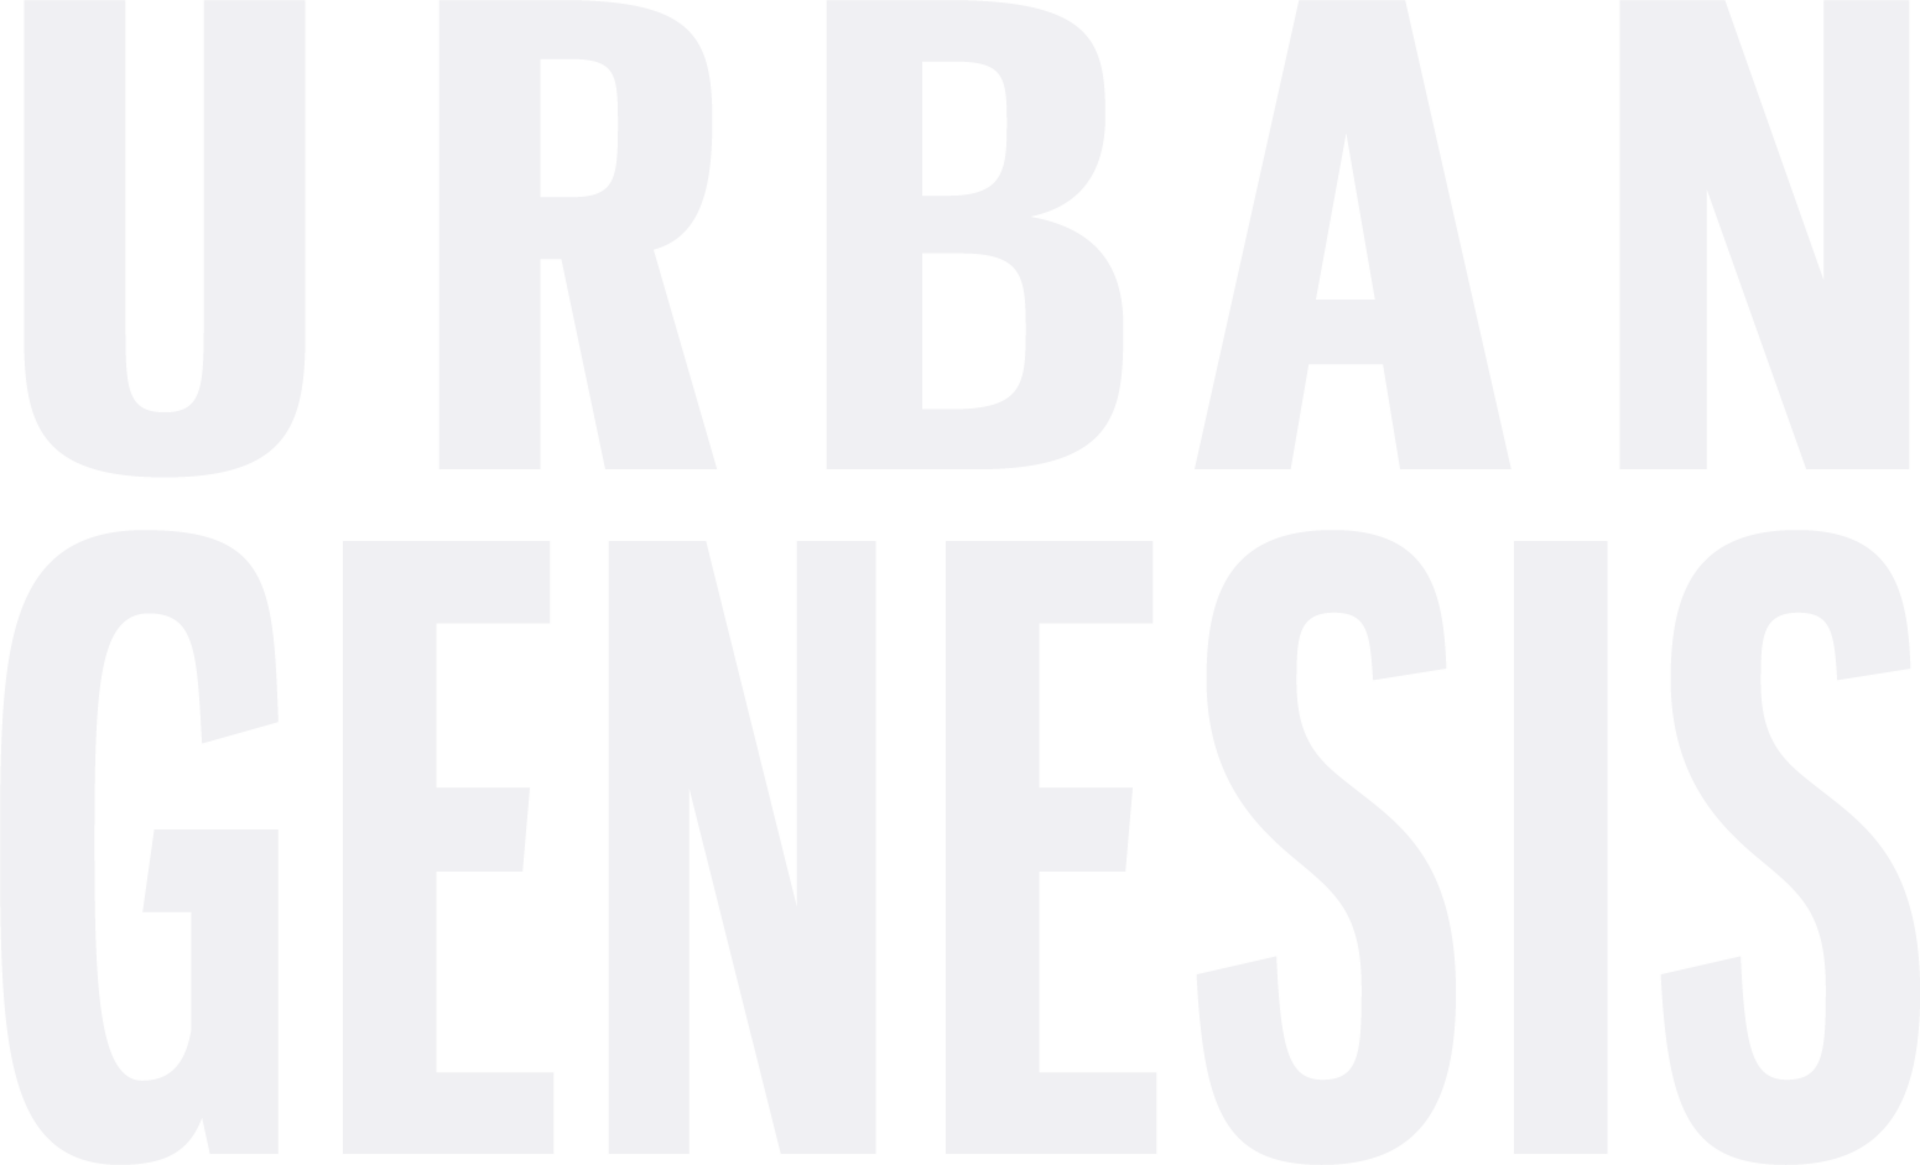 Urban Genesis